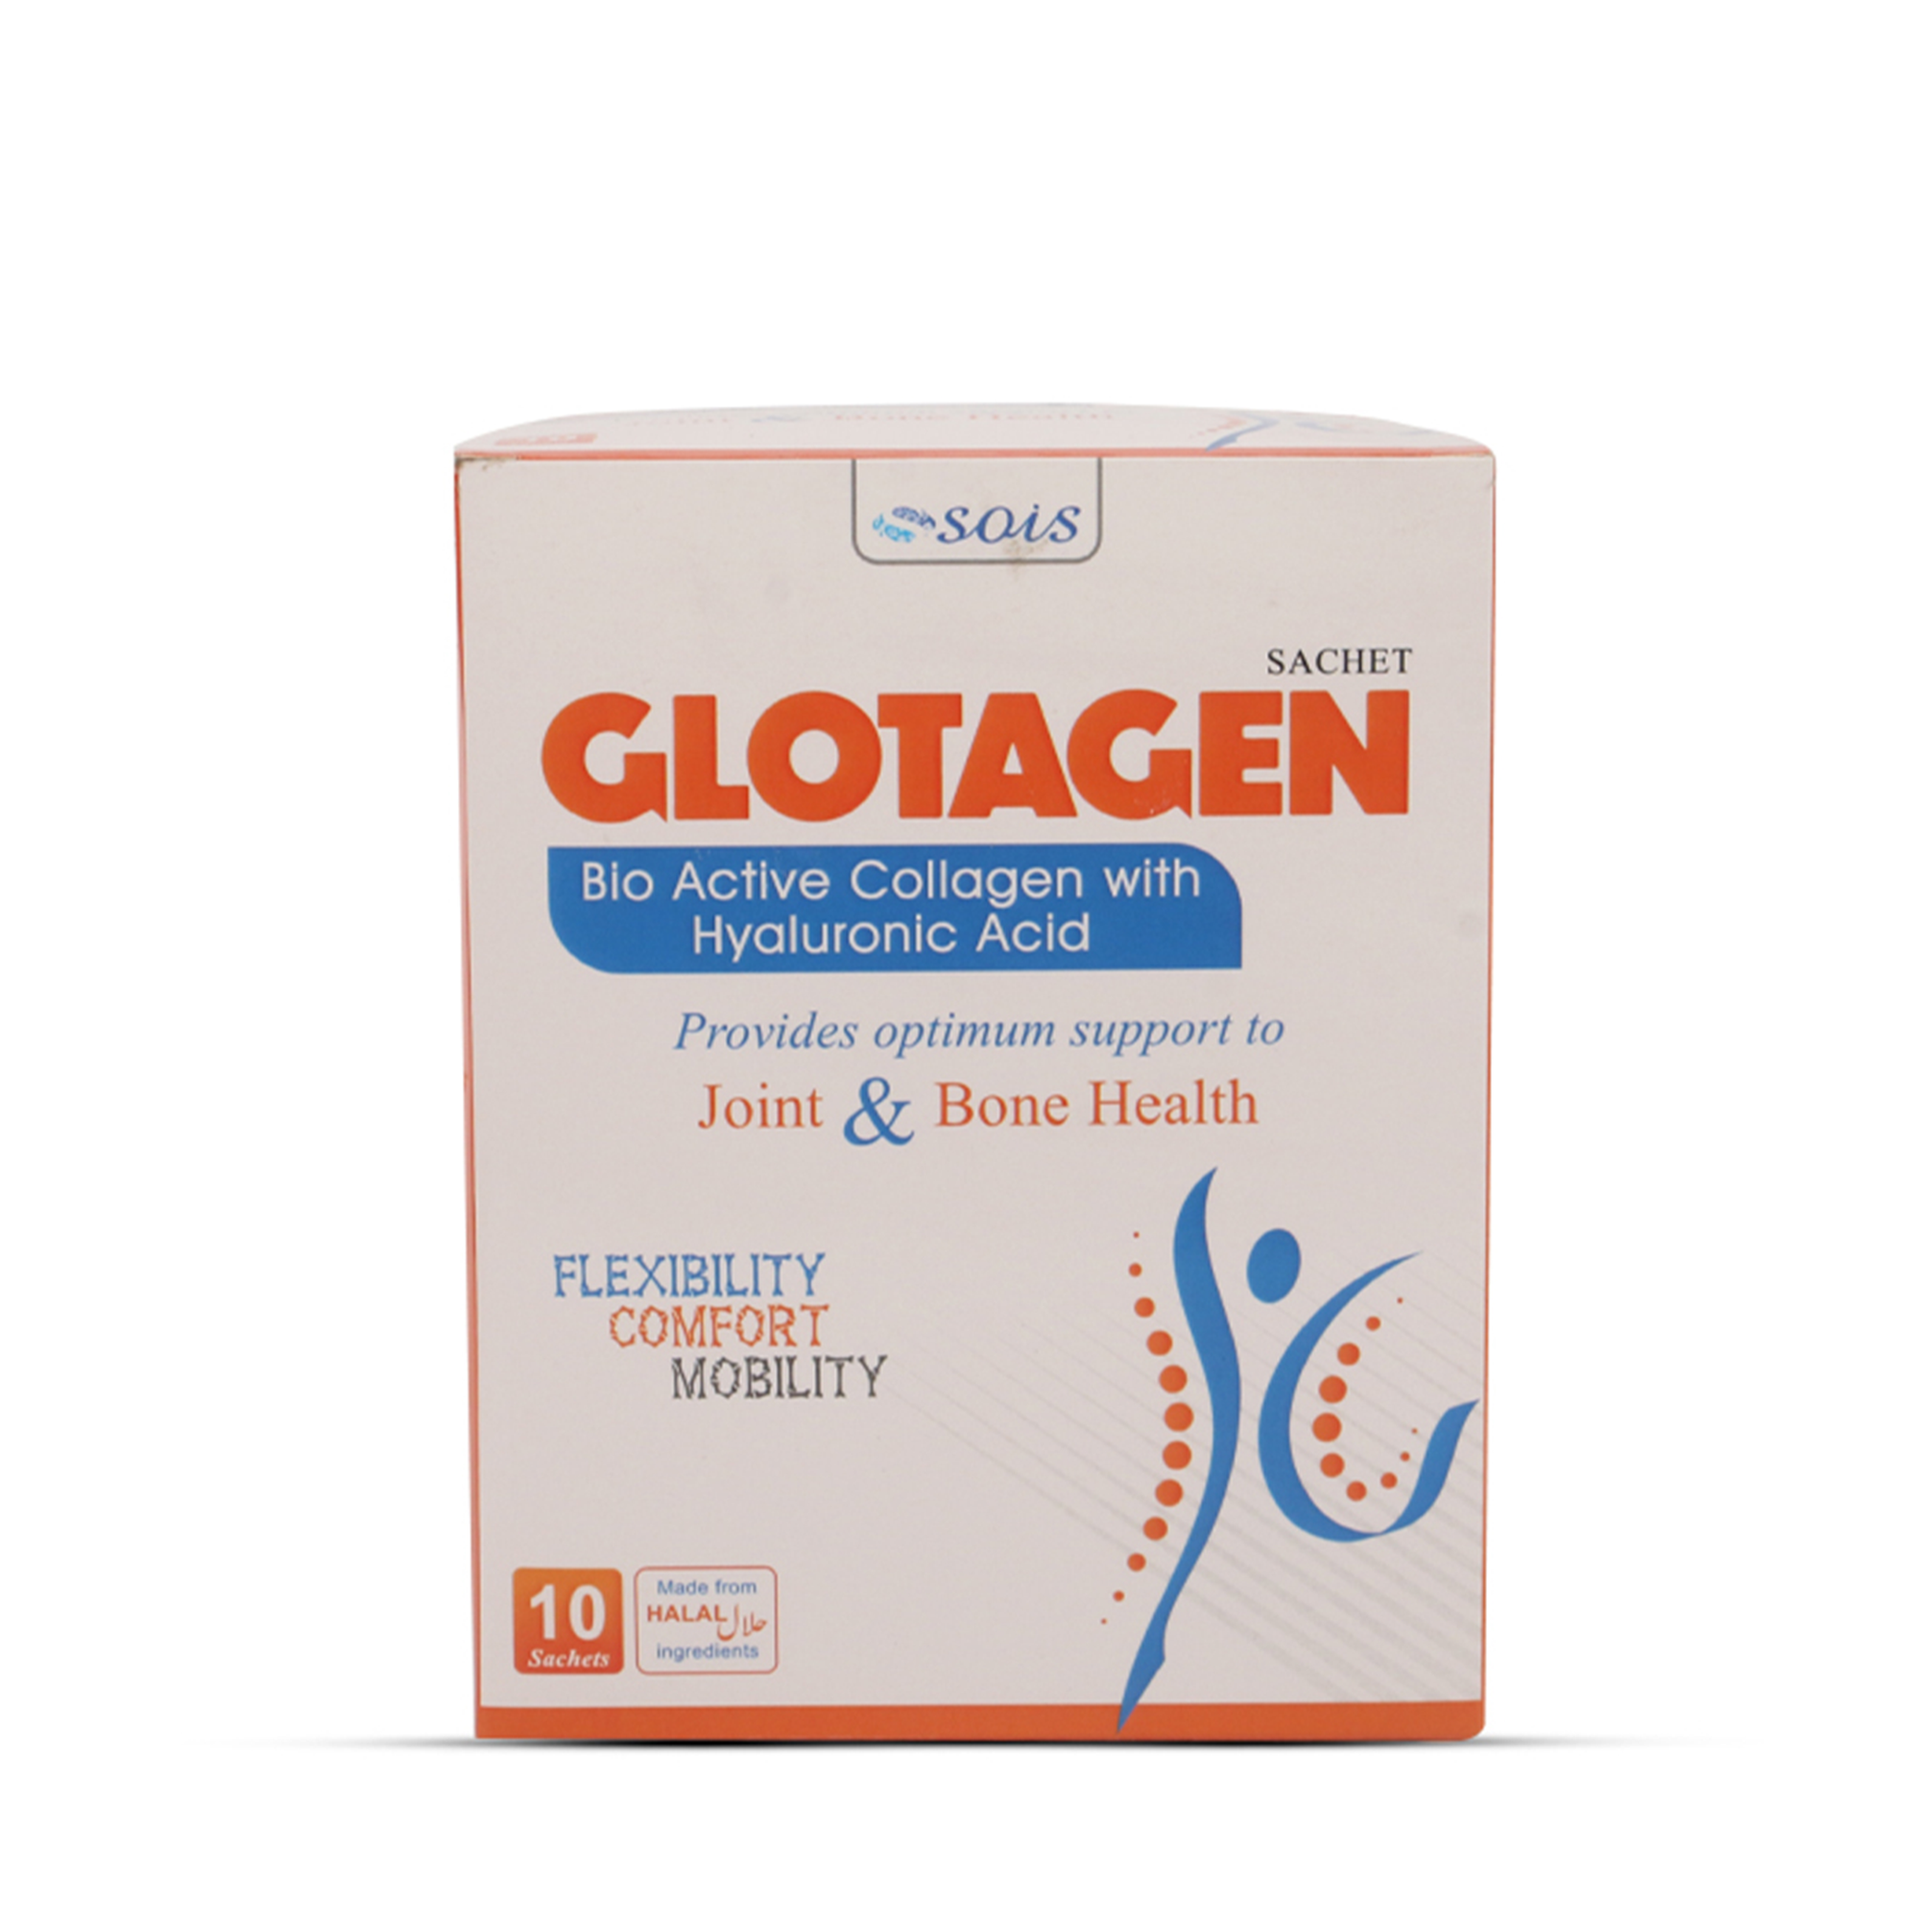 Glotagen Sachet (Collagen with Hyaluronic Acid)